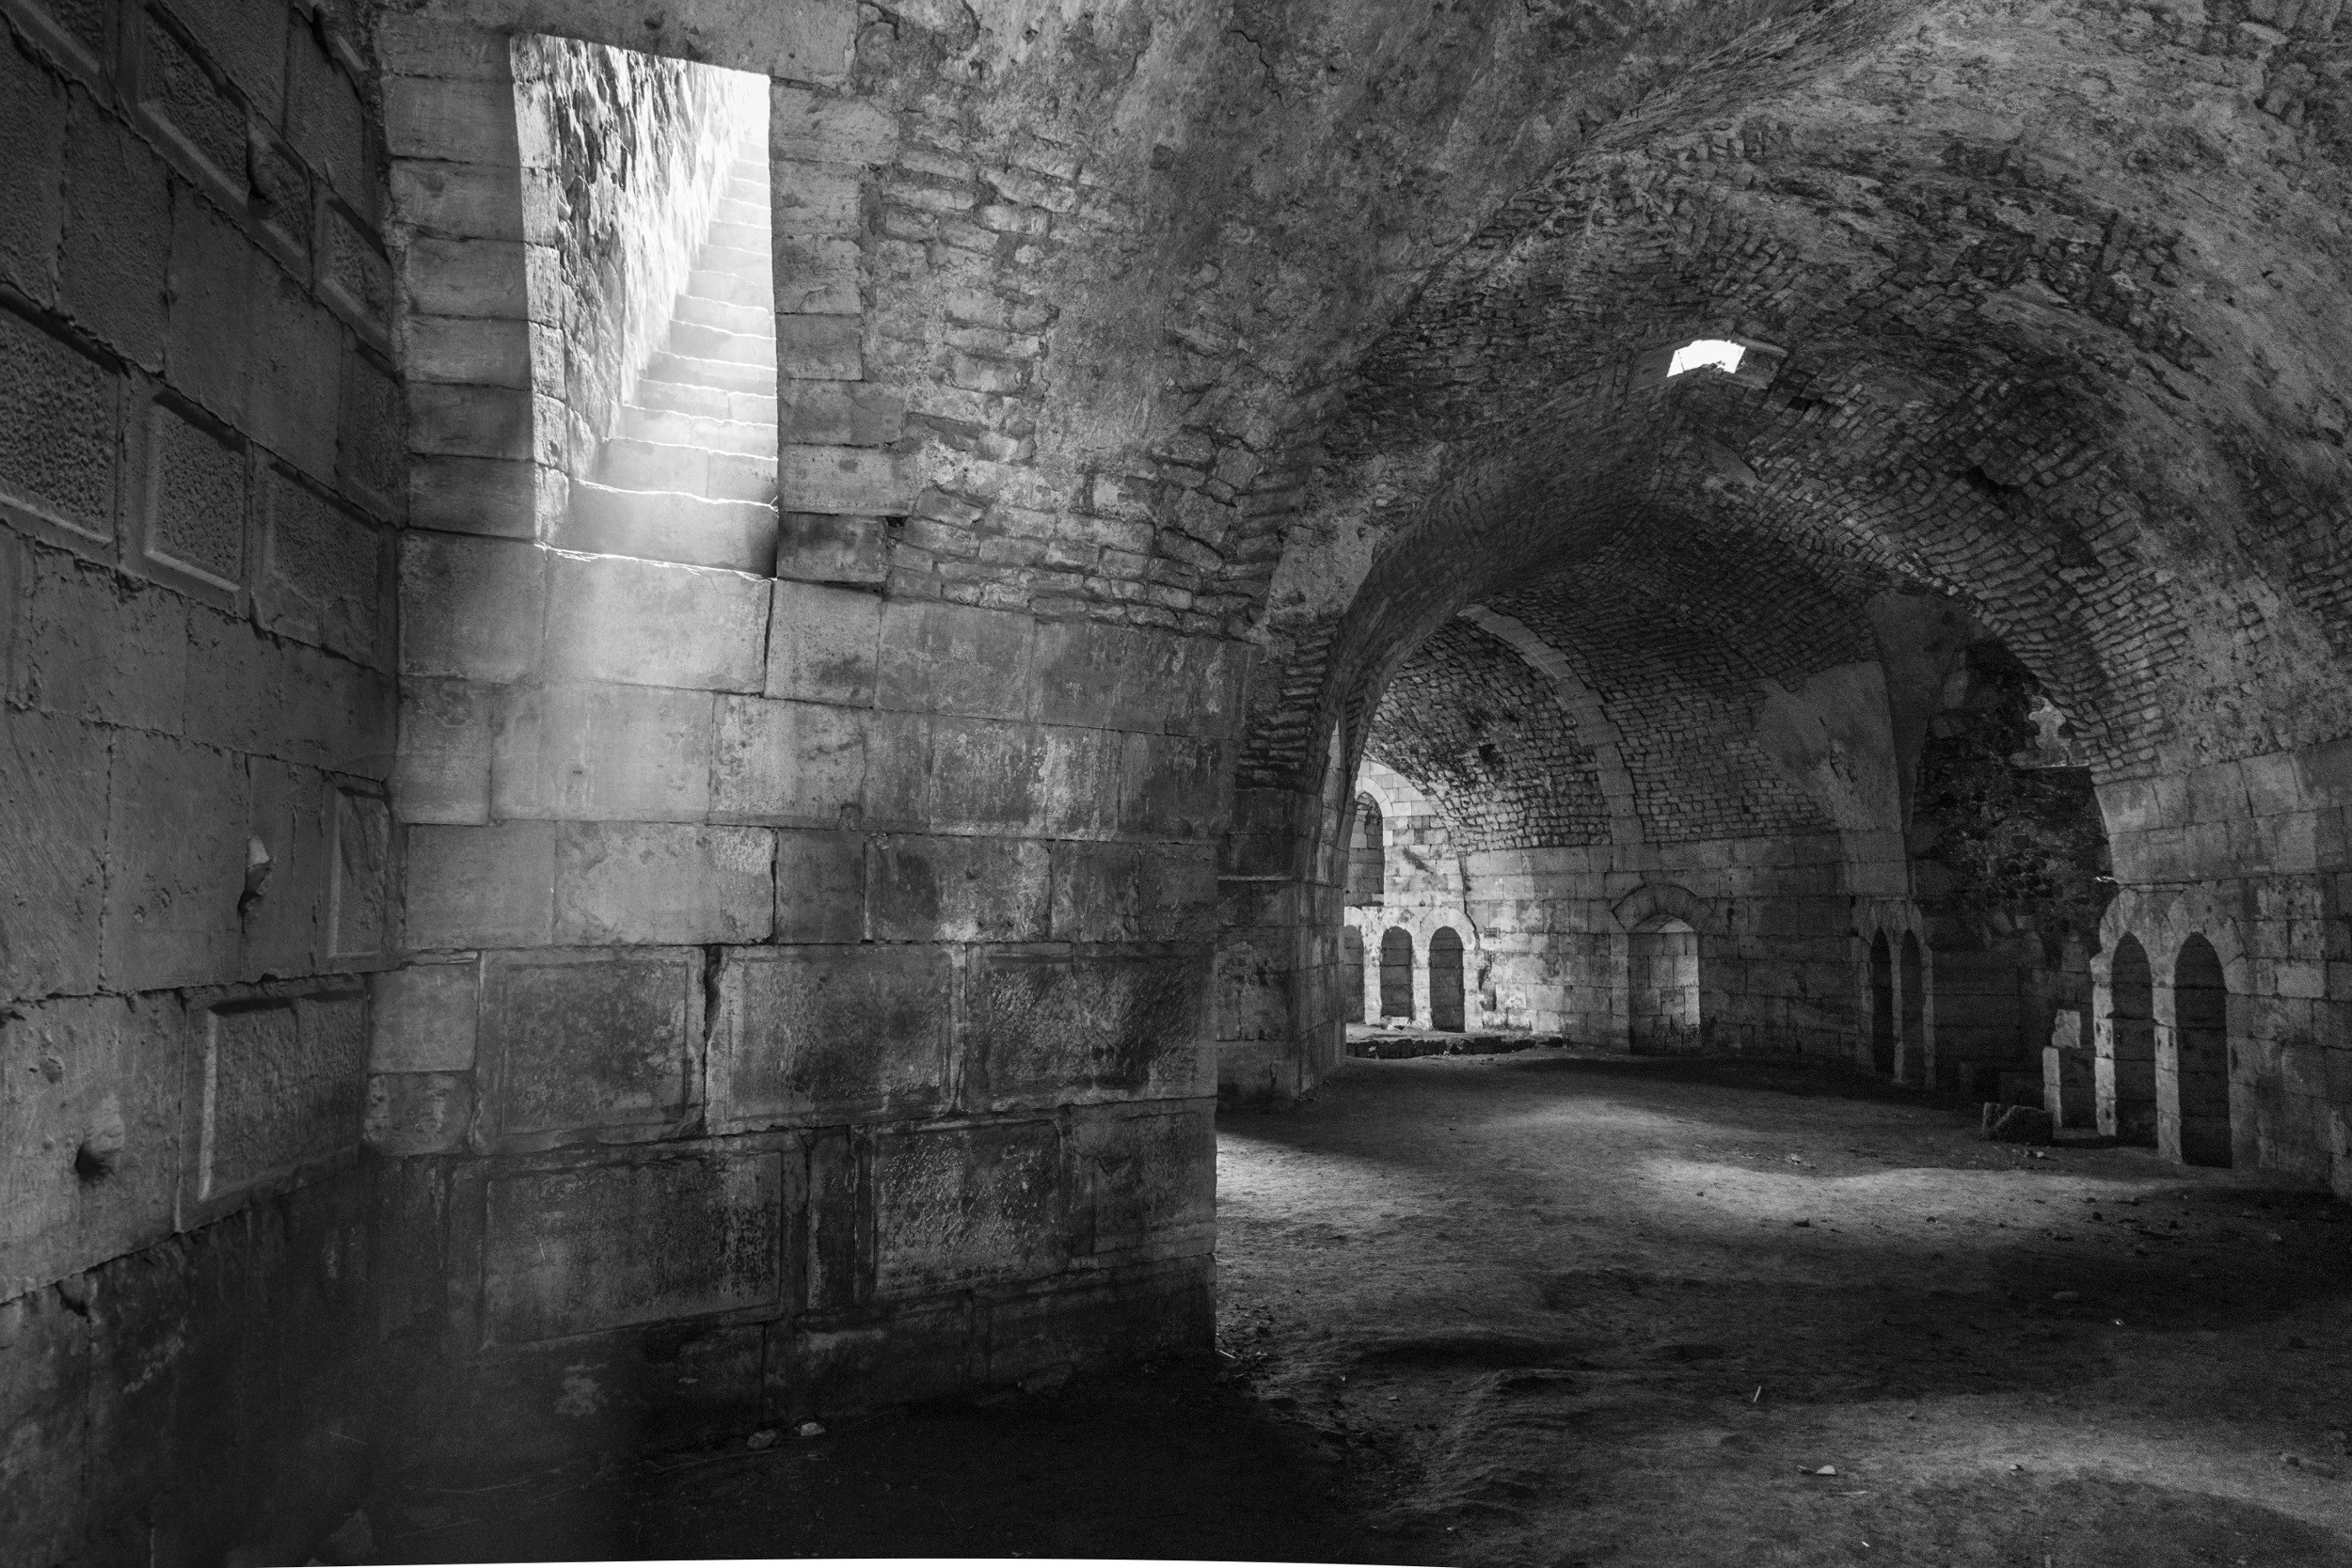 The corridor inside Krac des Chevaliers.